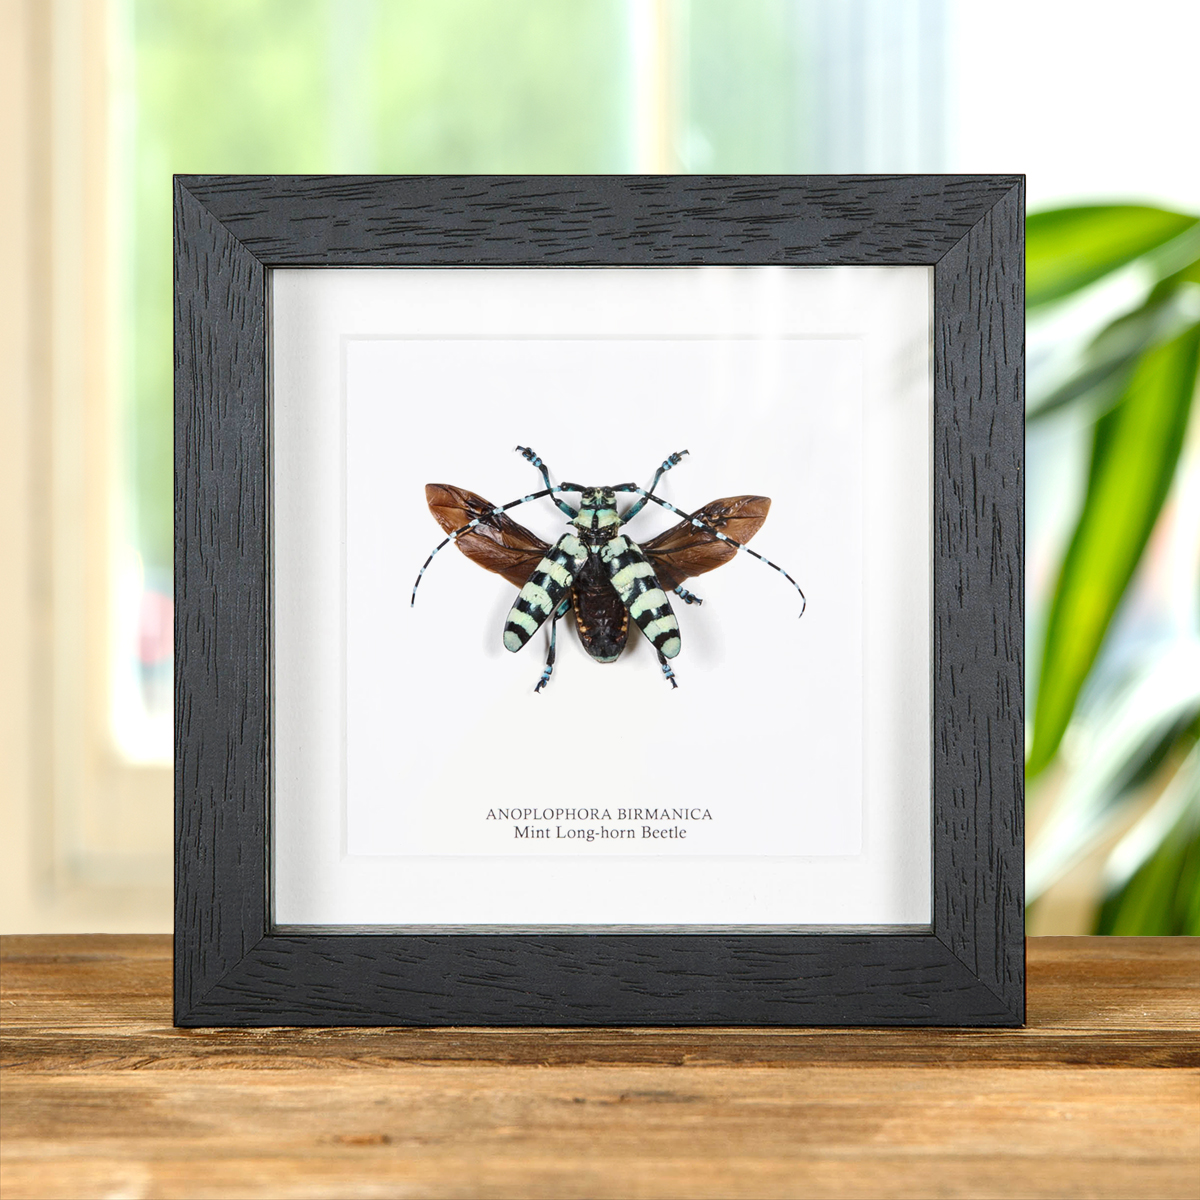 Minibeast Mint Long-horn Beetle In Box Frame (Anoplophora birmanica)